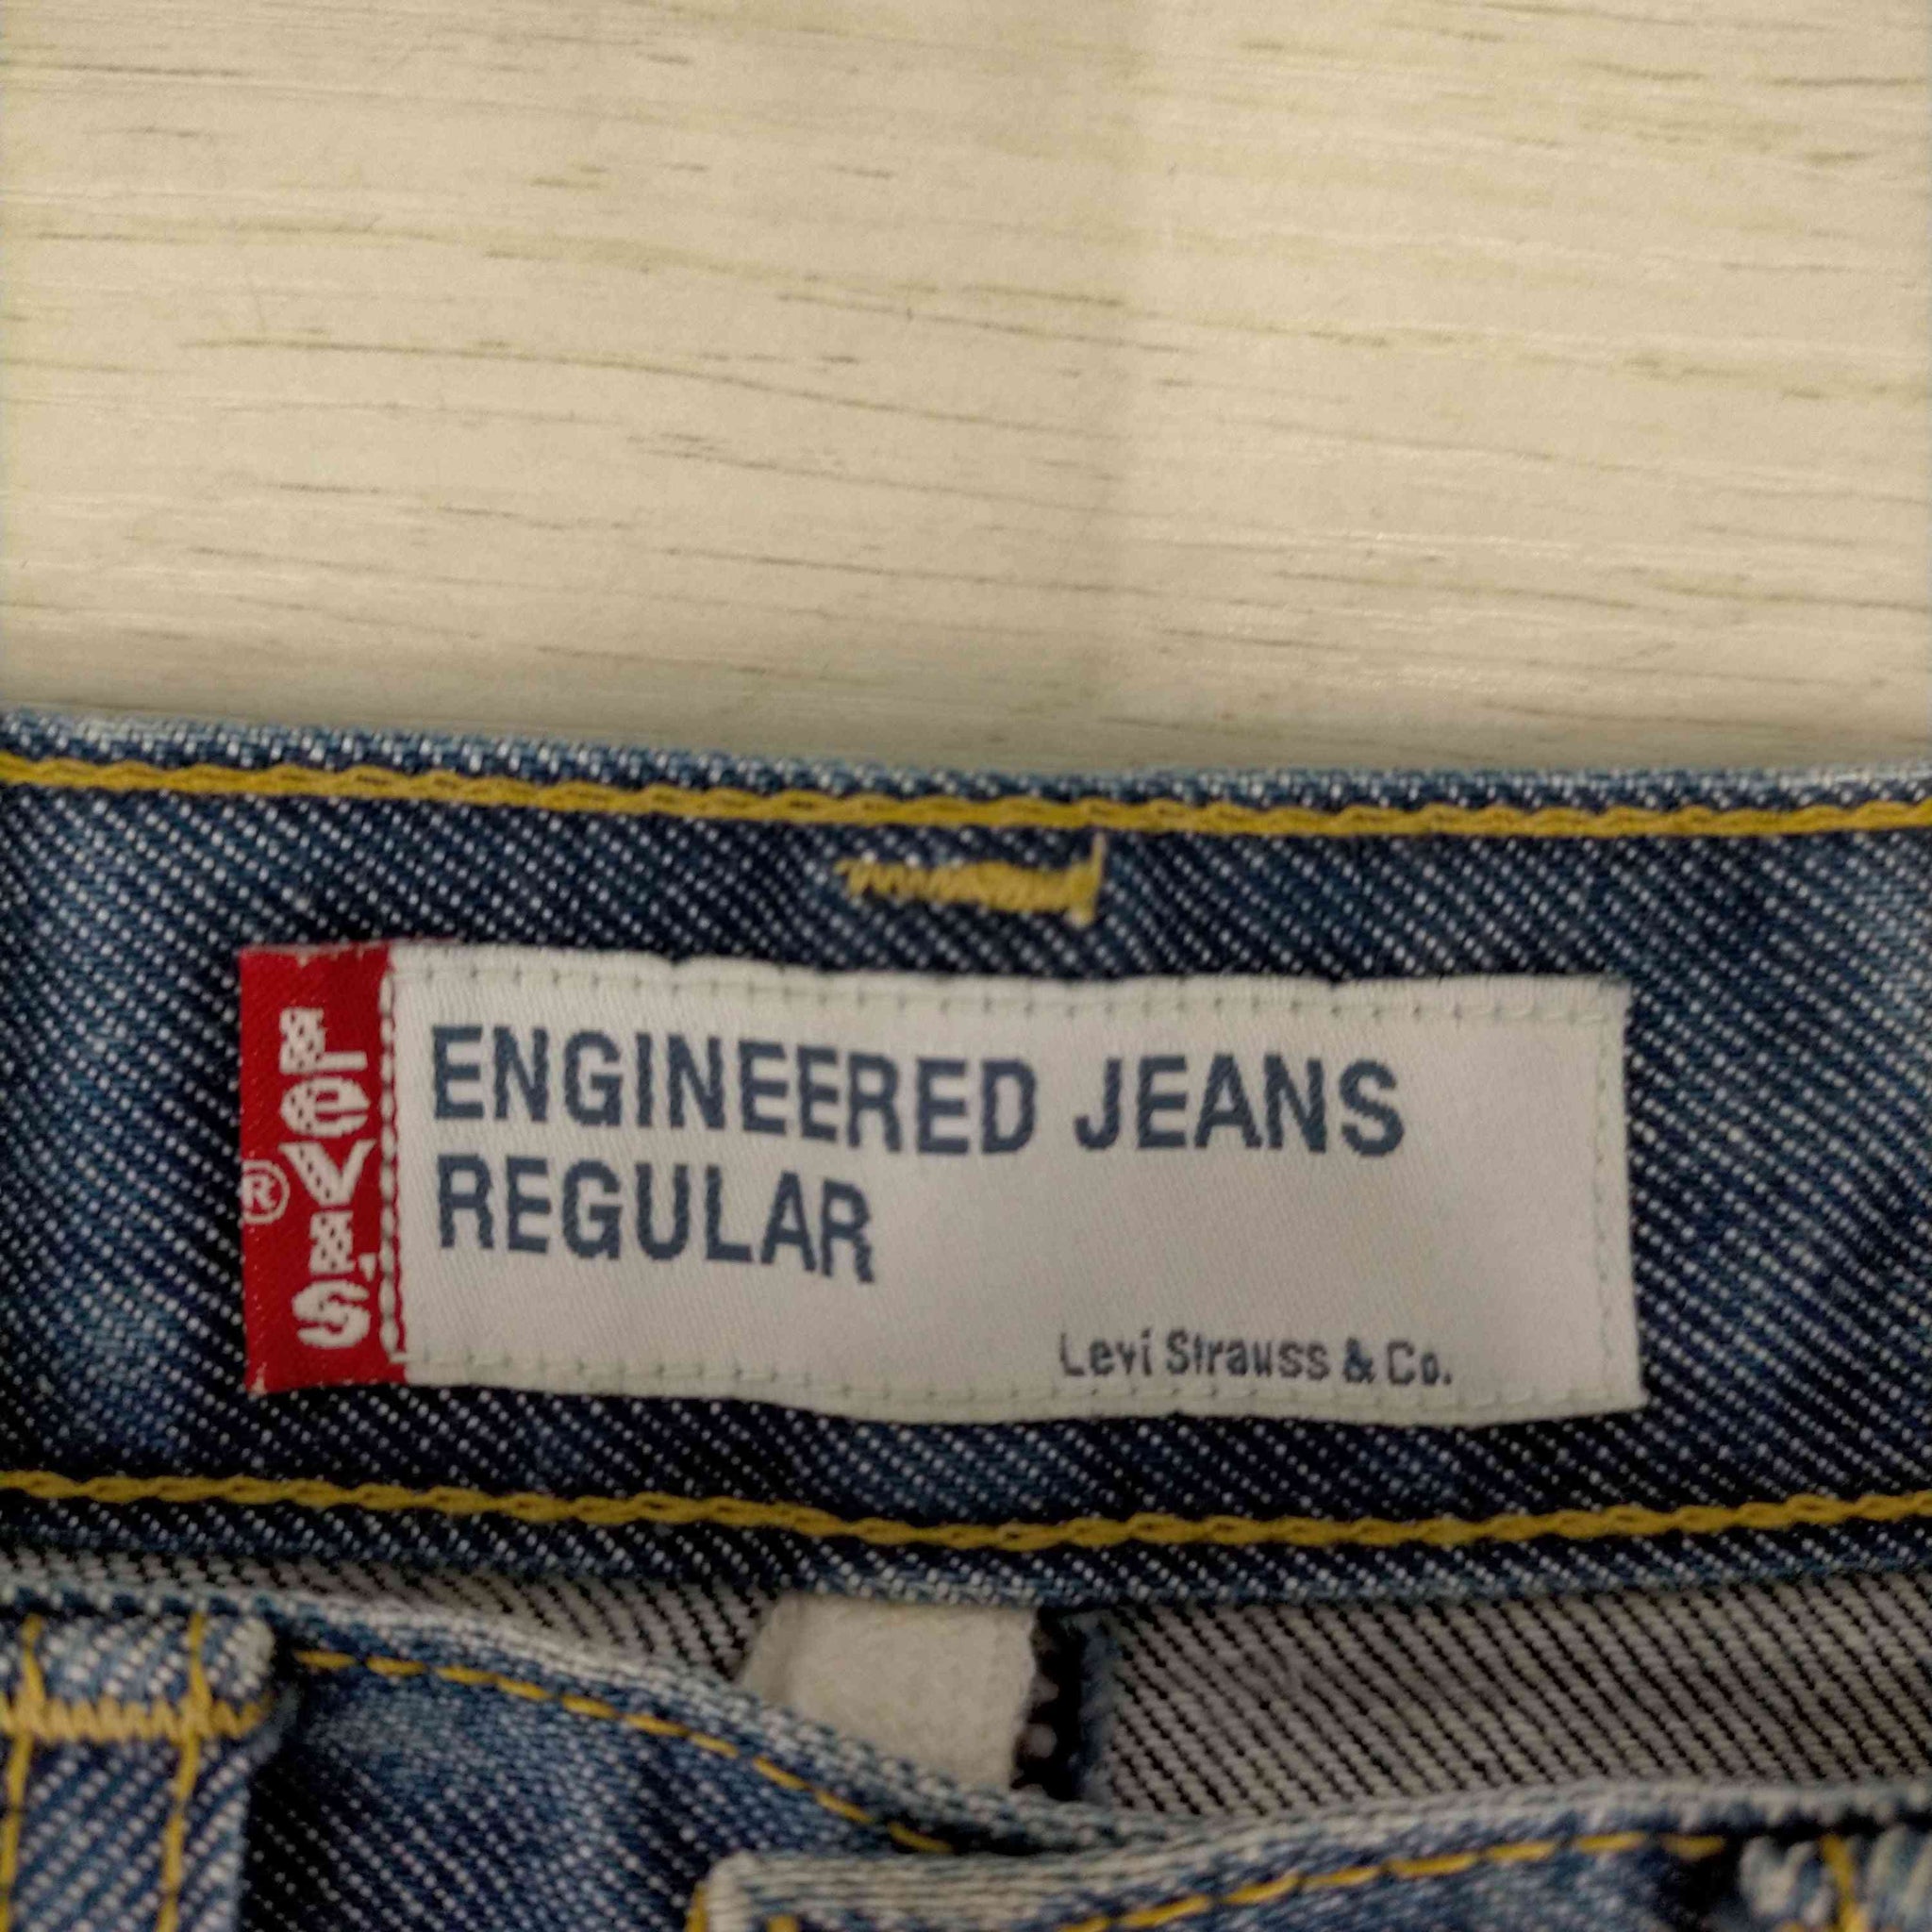 Levis(リーバイス)engineered jeans 日本製 立体裁断デニムパンツ